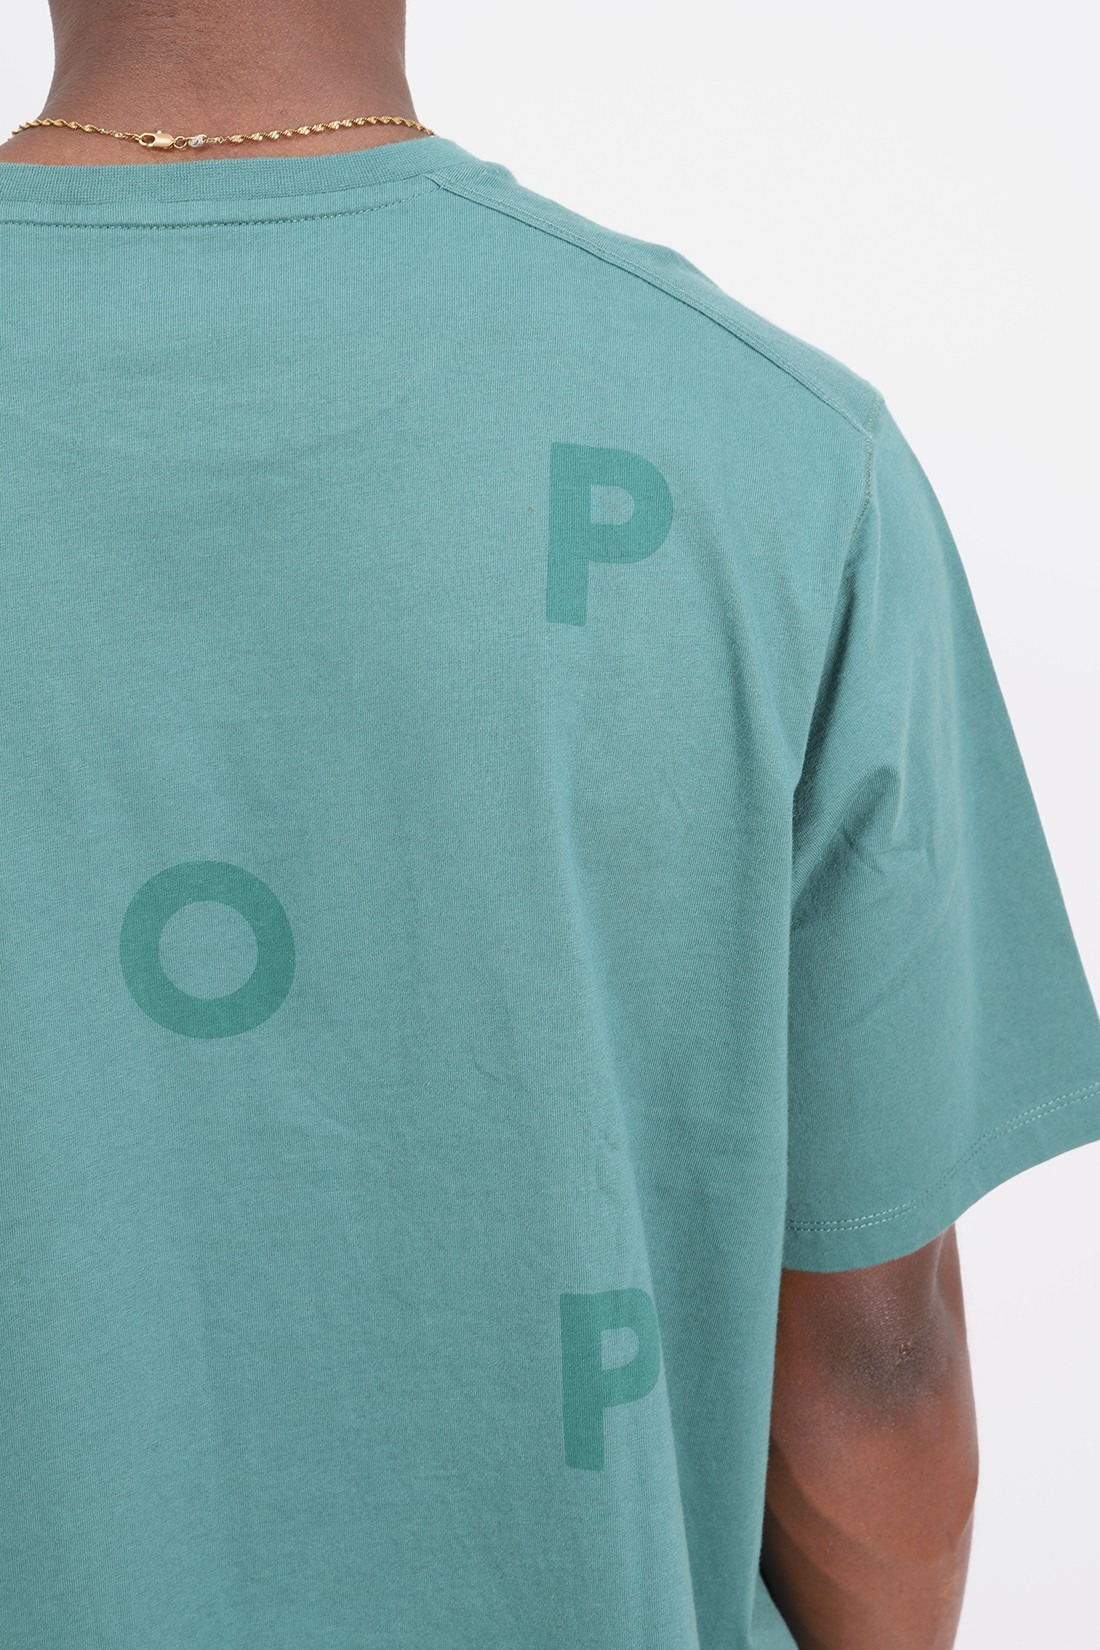 POP TRADING COMPANY / Logo t-shirt Bistro green